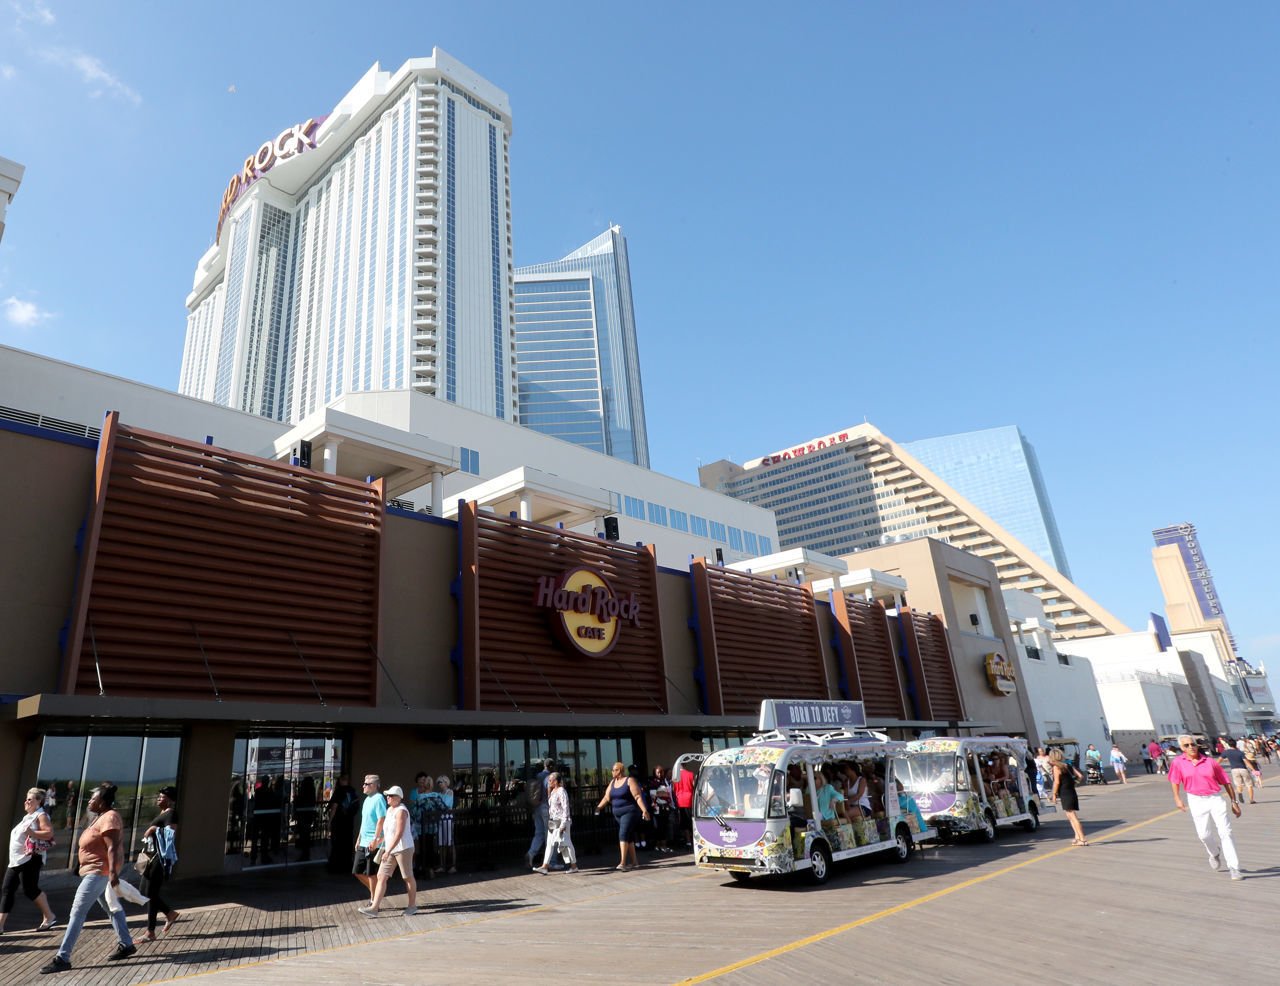 hard rock casino atlantic city parking rates